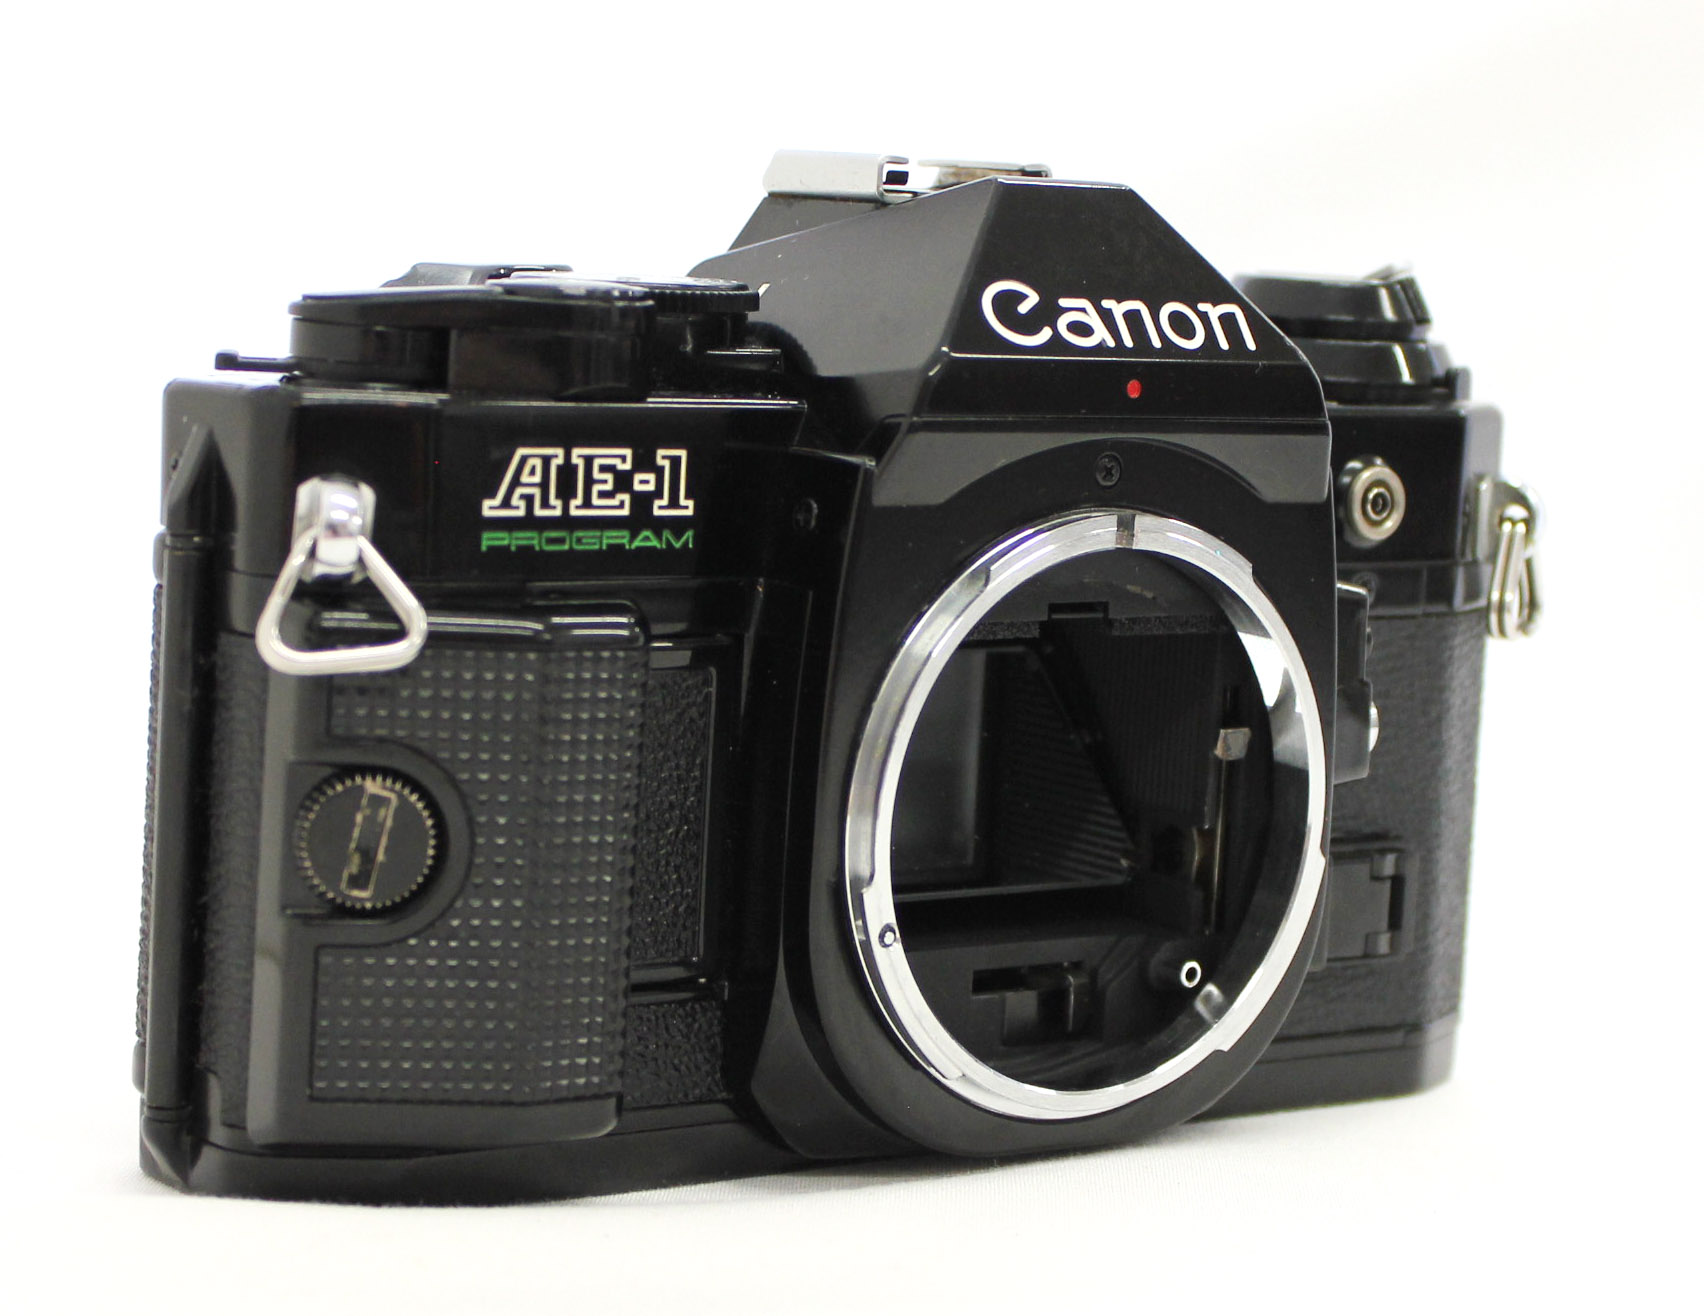 Canon AE-1 Program 35mm SLR Film Camera Black with New FD 50mm F/1.4 Lens  from Japan (C1840) | Big Fish J-Camera (Big Fish J-Shop)